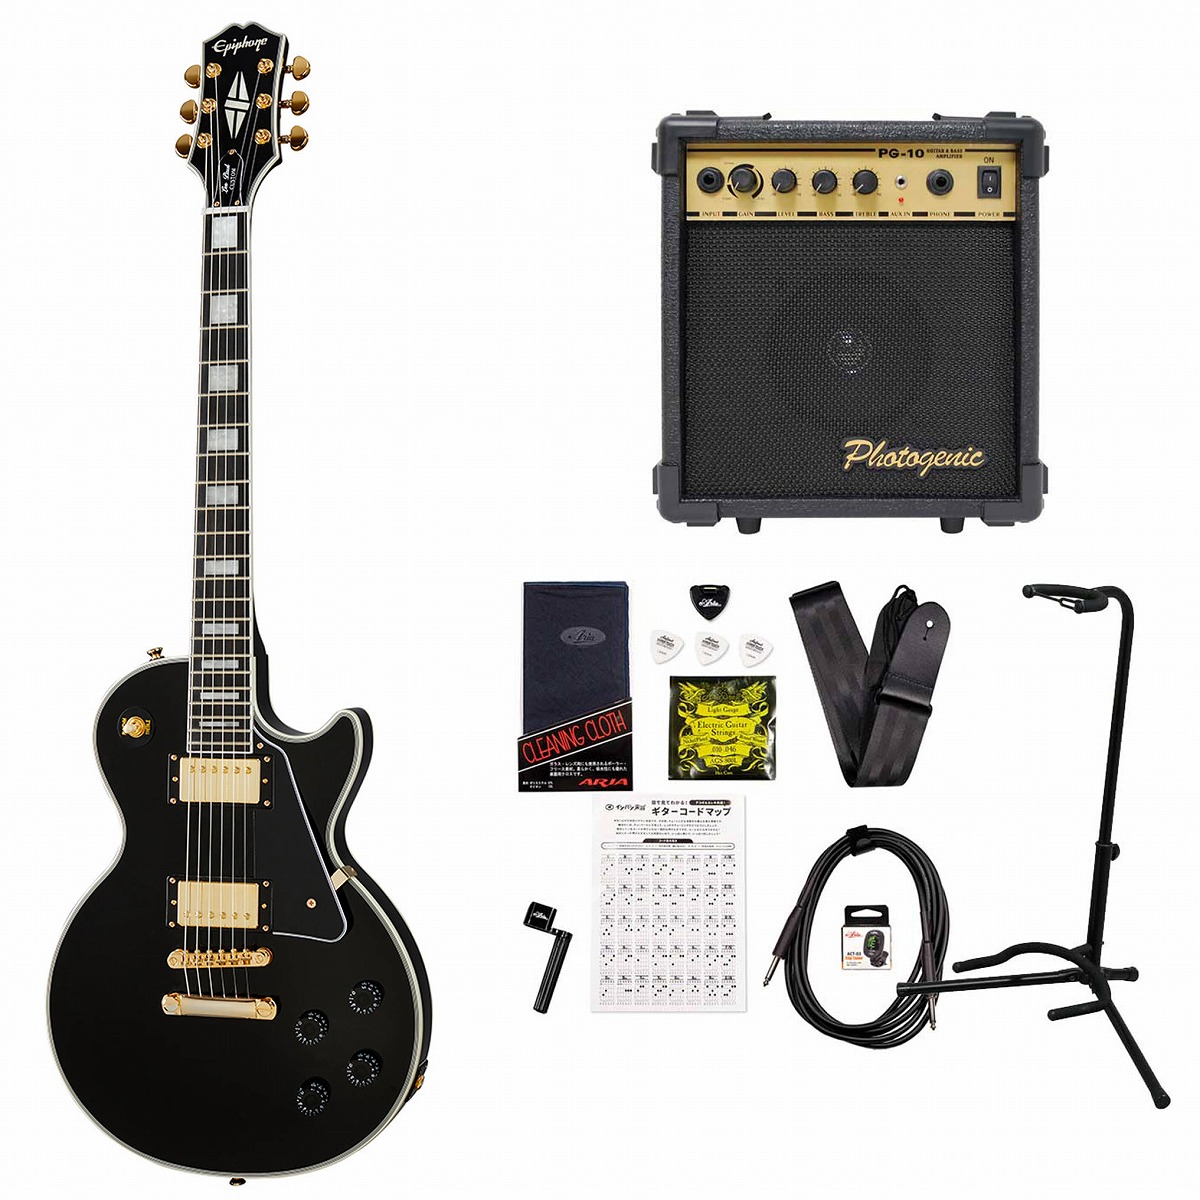 Epiphone / Inspired by Gibson Les Paul Custom Ebony エピフォン エレキギター レスポール カスタム  PG-10アンプ付属エレキギター初心者セット